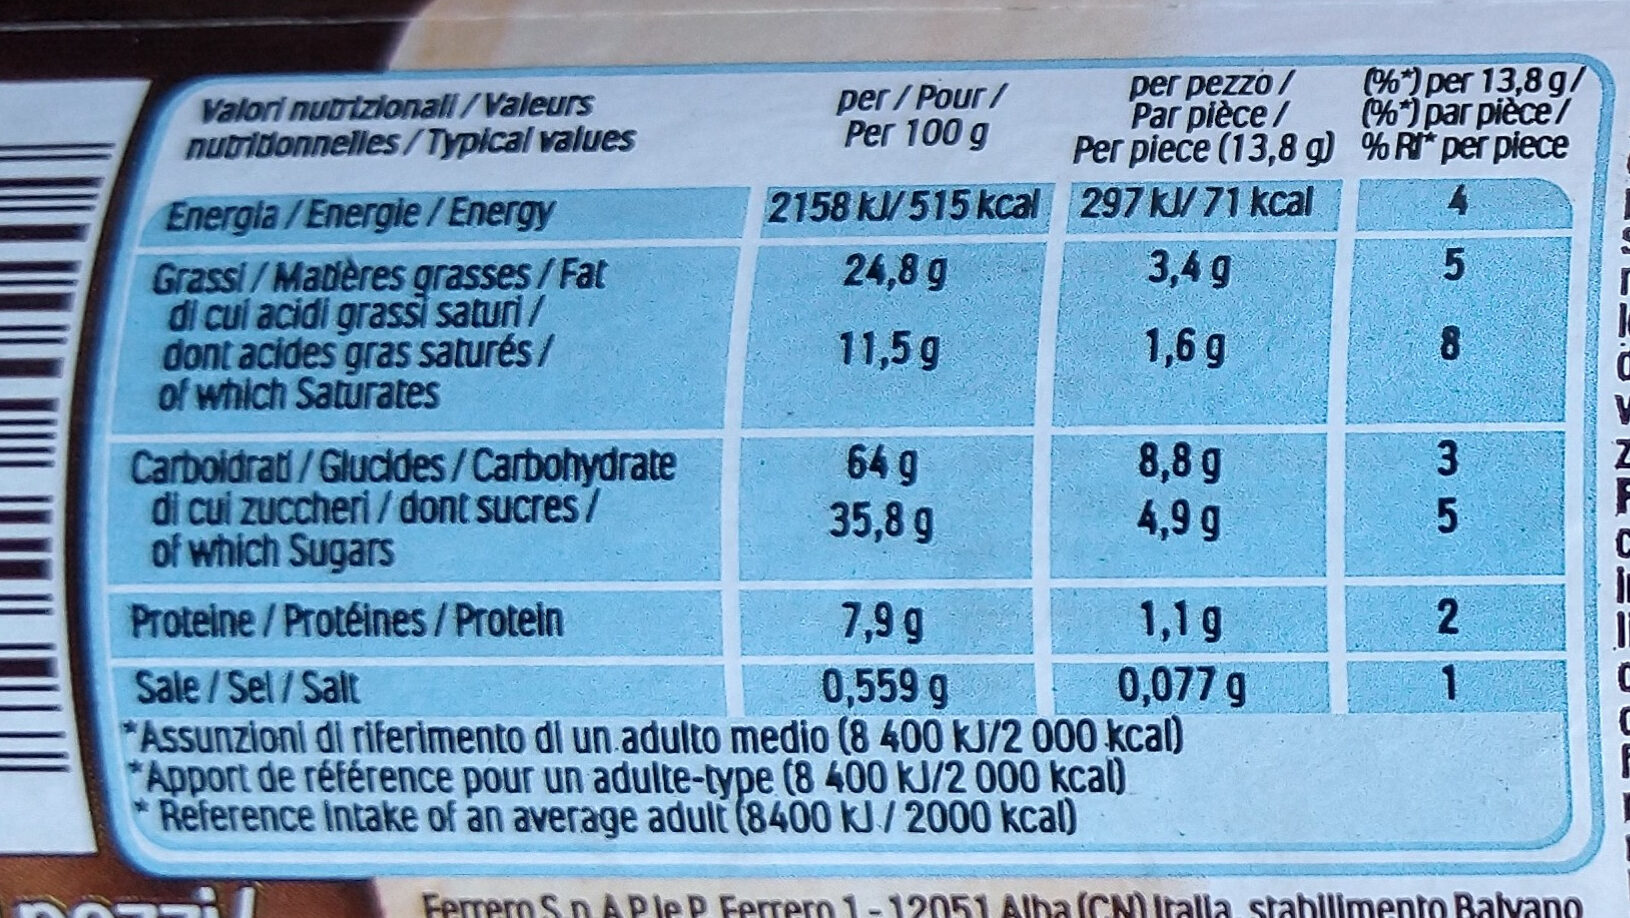 Nutella - Biscuits - Valori nutrizionali